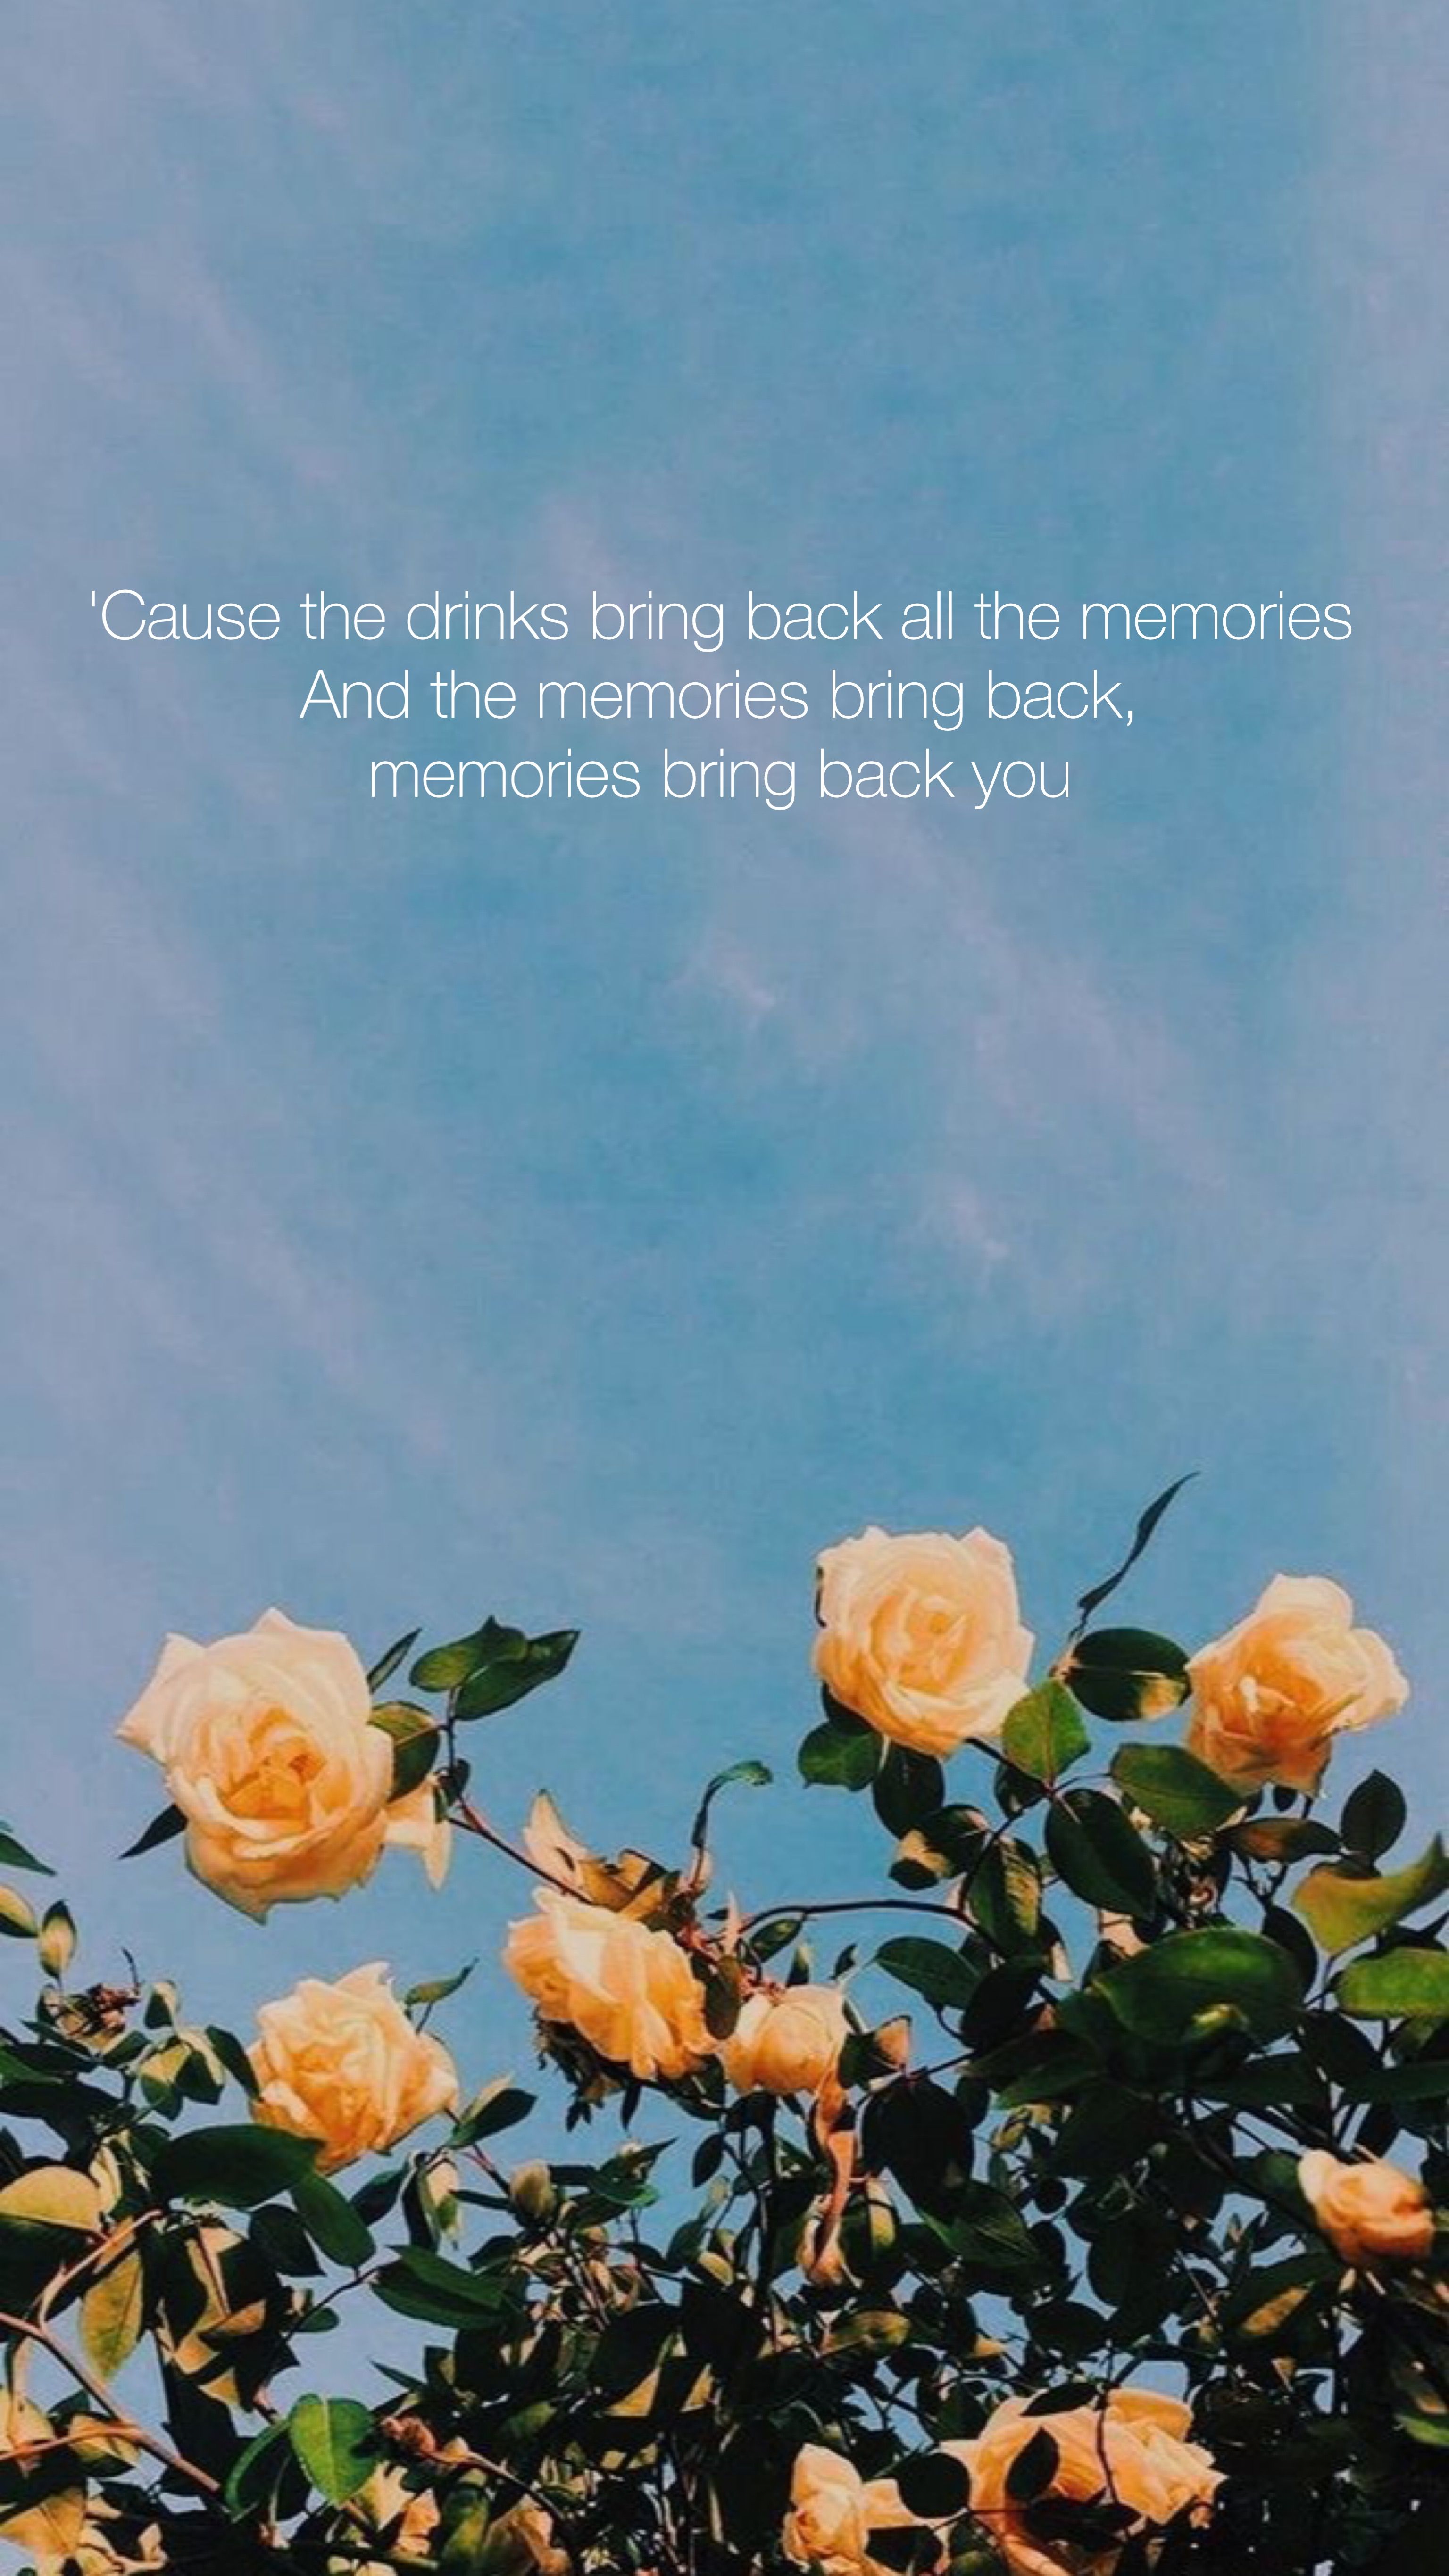 Lyrics #maroon5 #memories #wallpaperquotes #wallpaper Lyrics